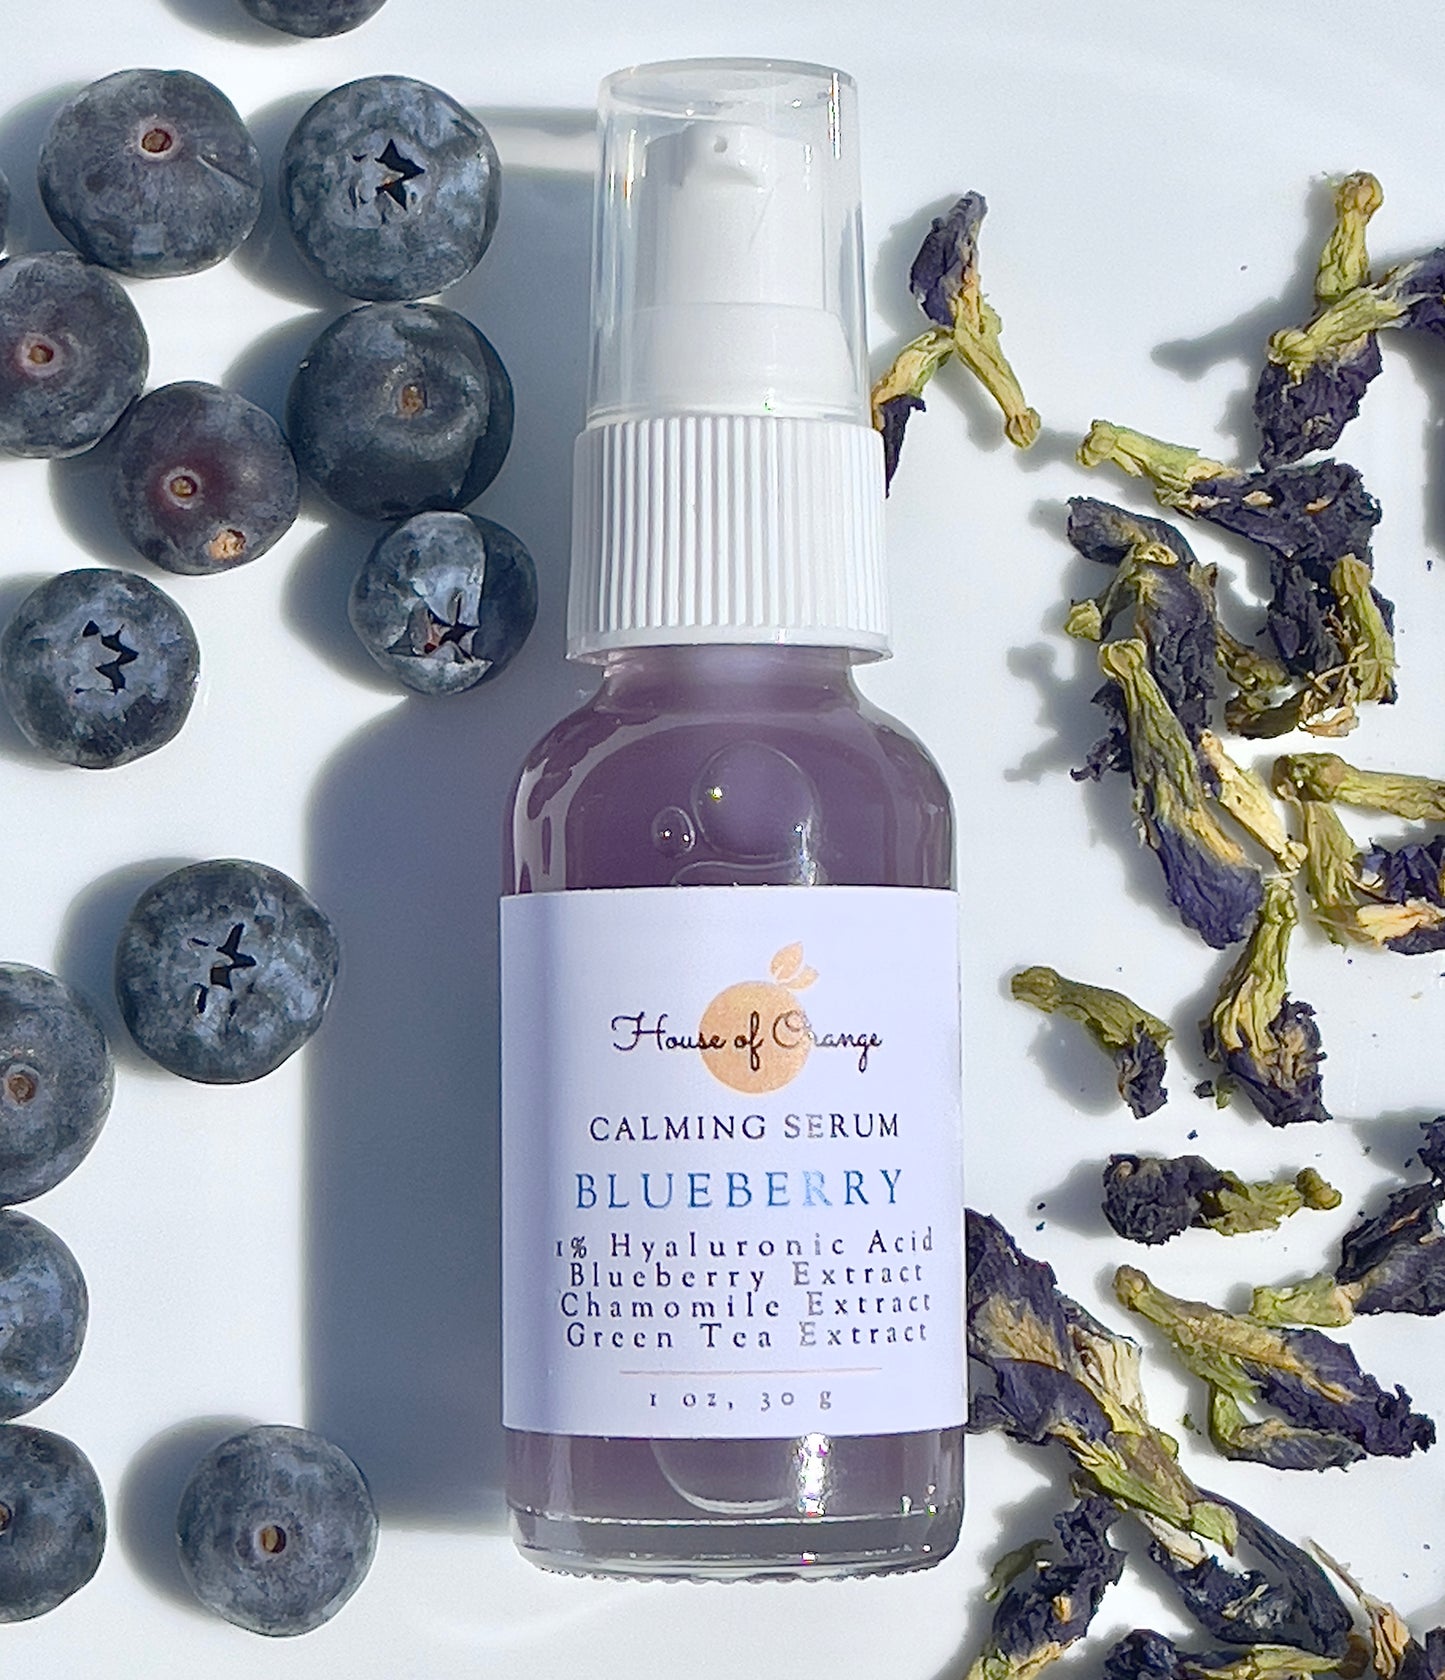 Blueberry Calming Serum